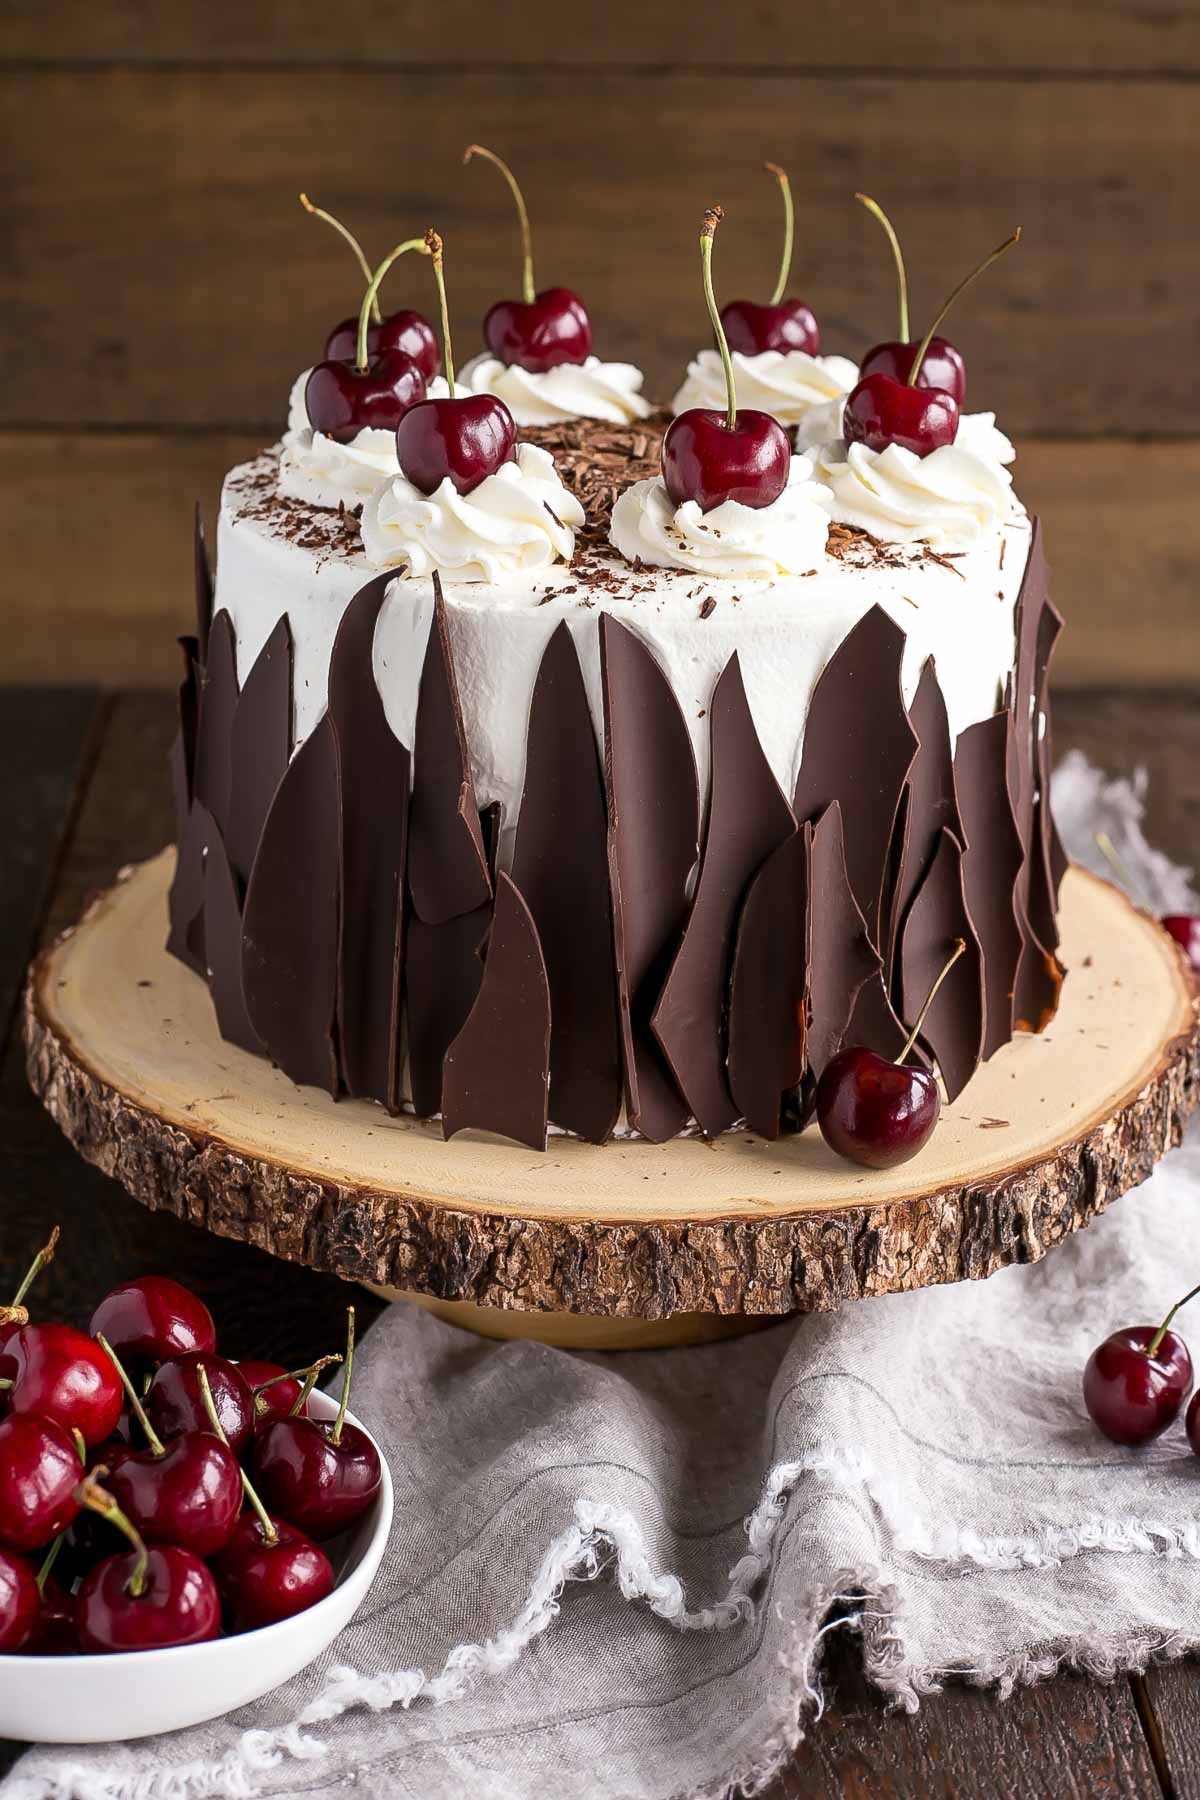 Cake with fresh cherries beside it.